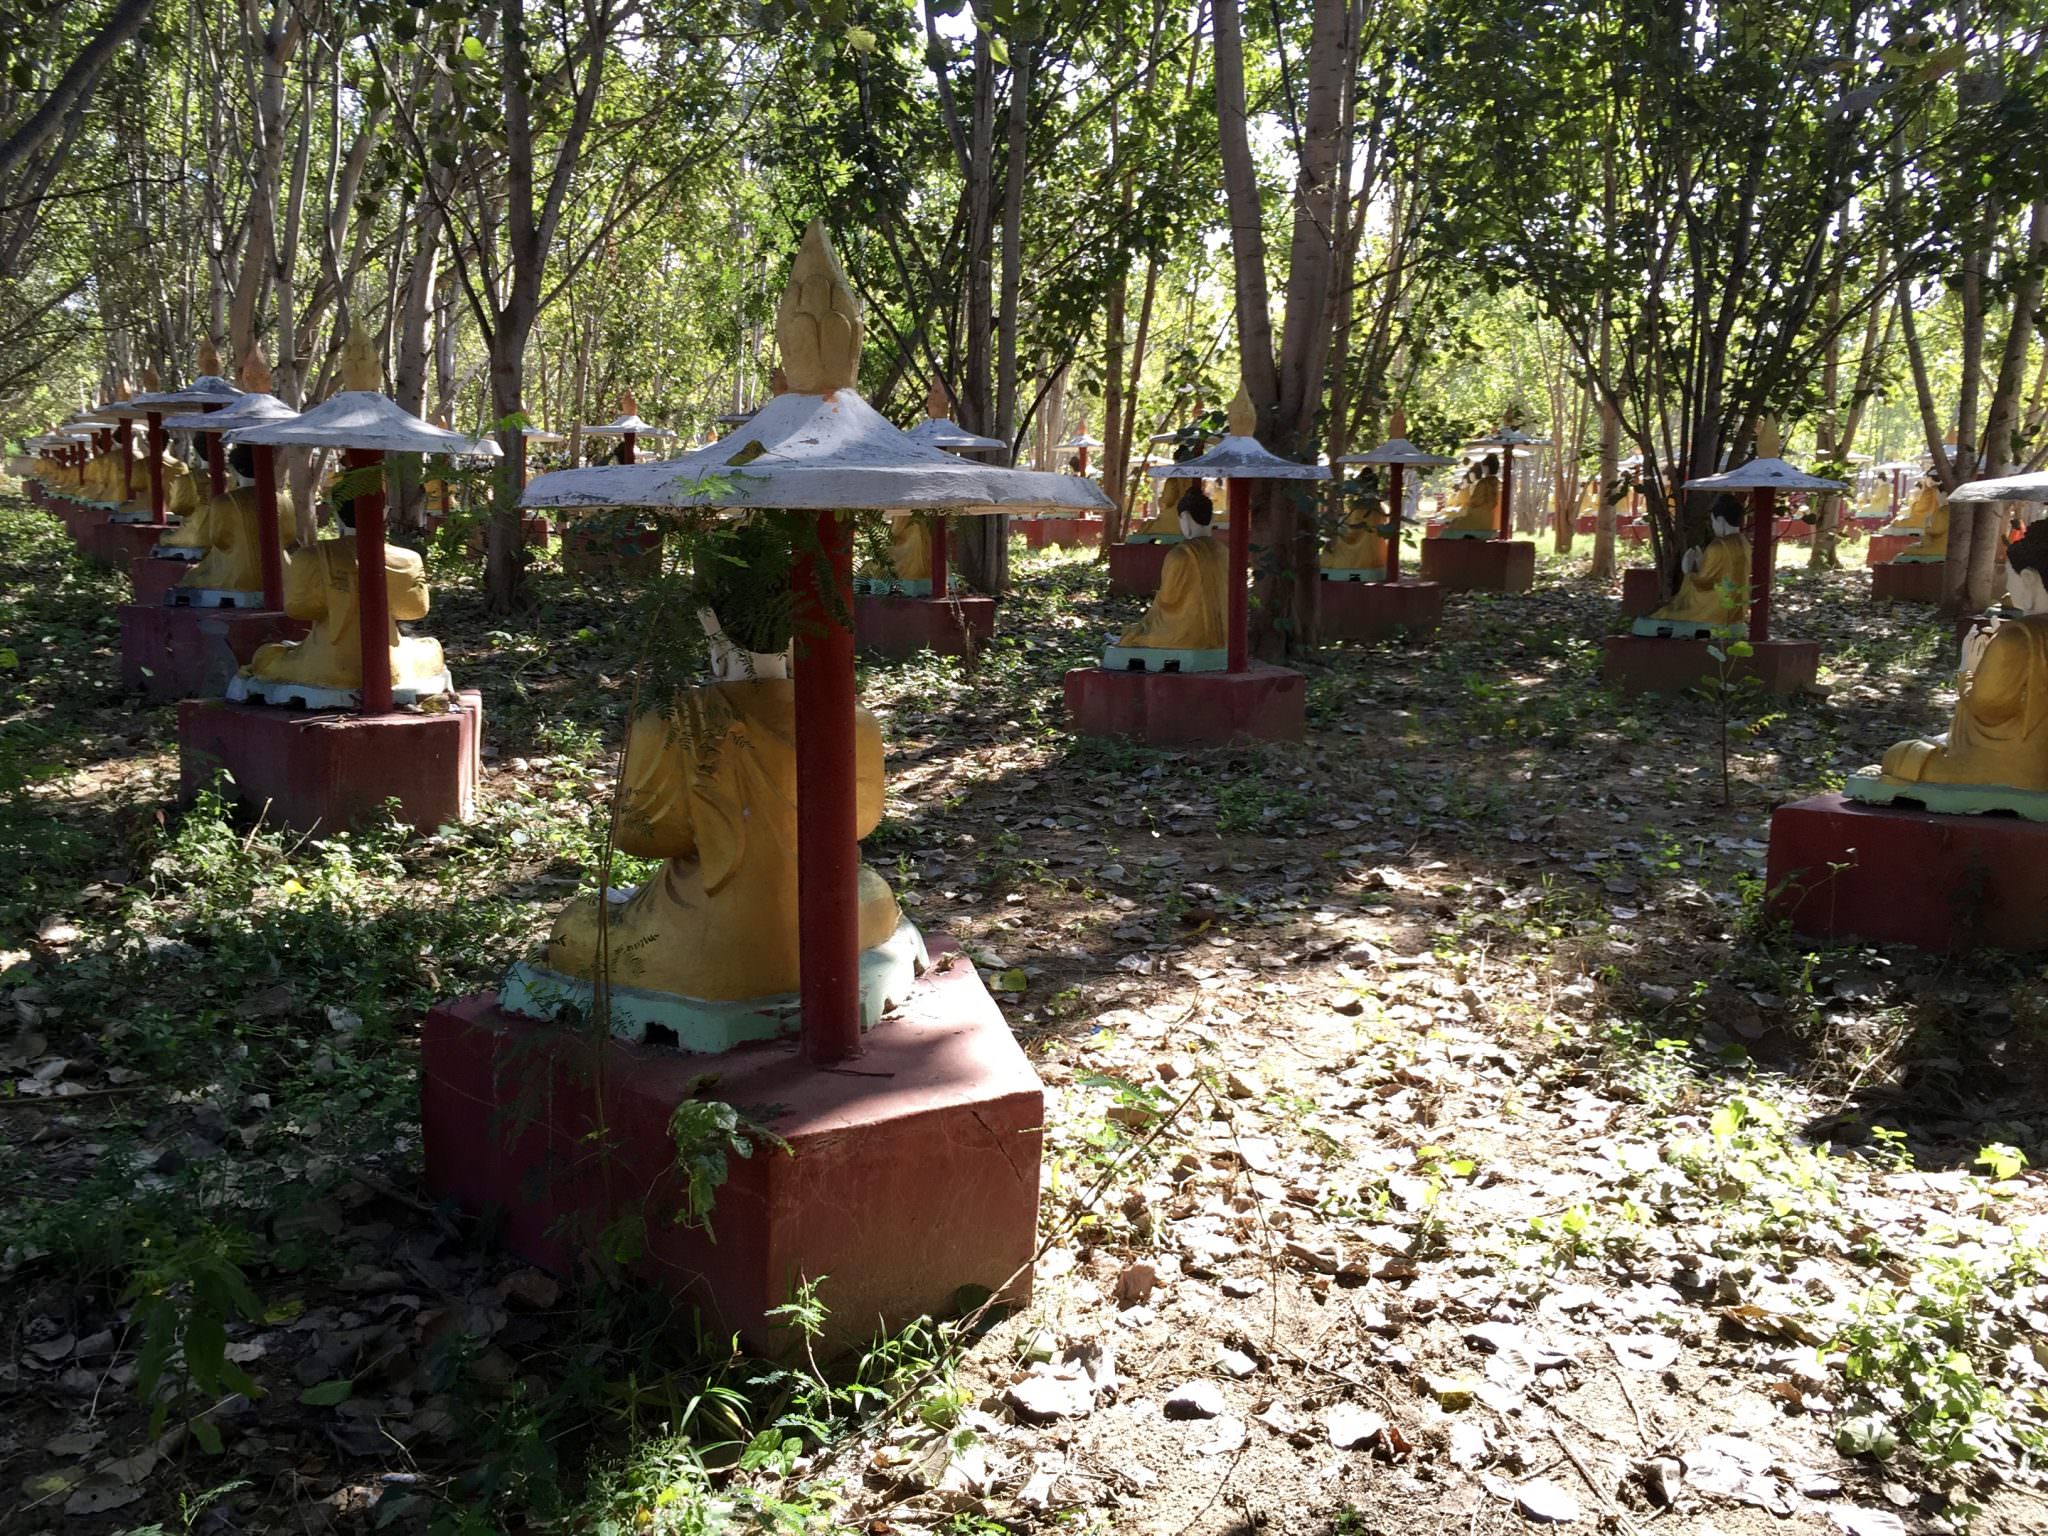 Row upon row upon row of Buddha statues. © 2015 Gail Jessen